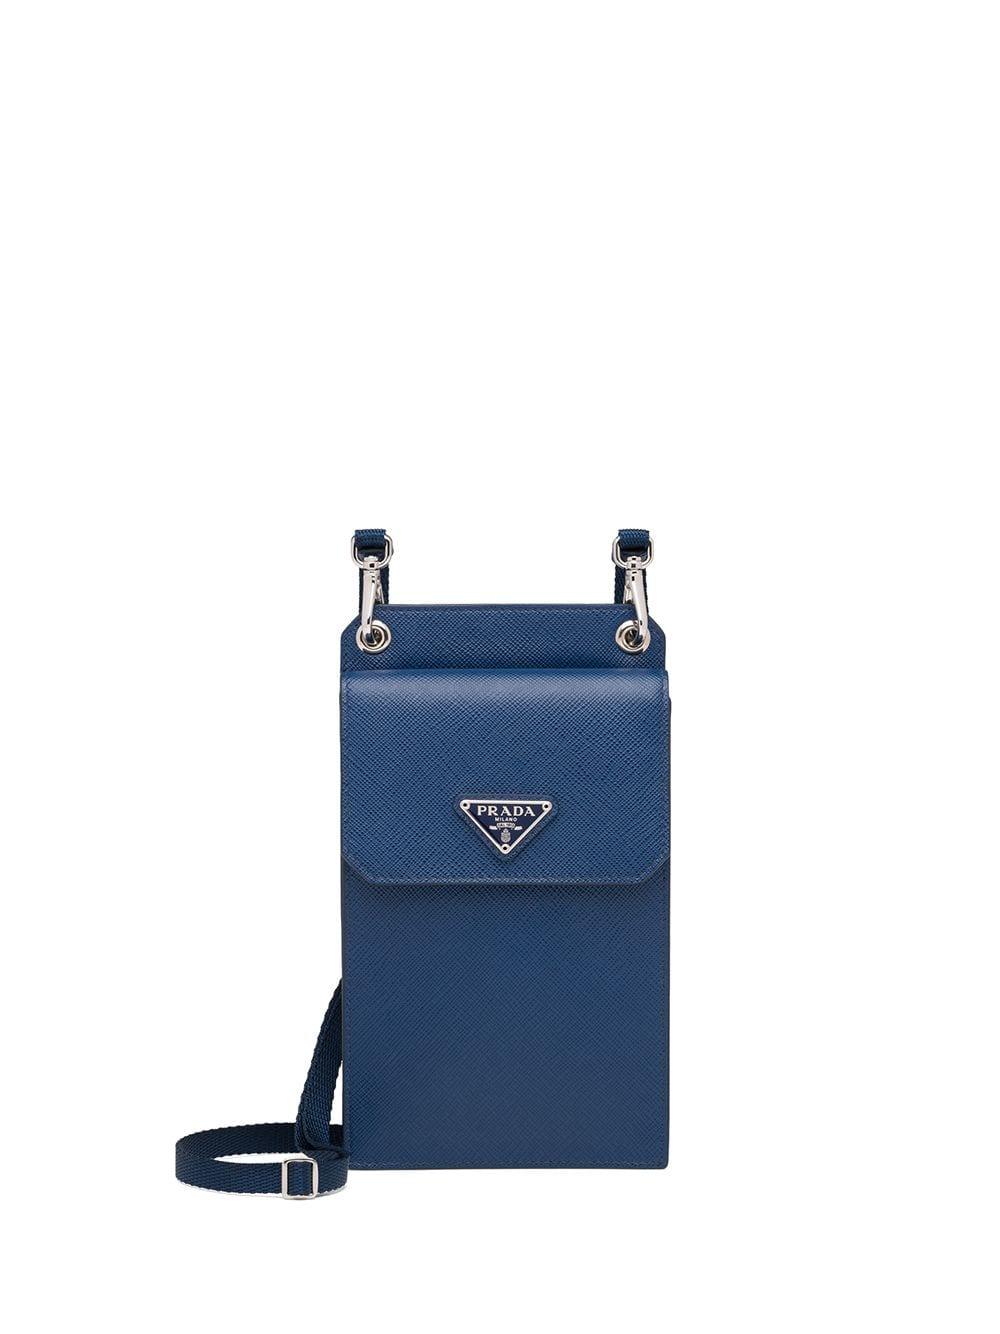 Prada Saffiano Leather Smartphone Case in Blue for Men - Save 4% - Lyst